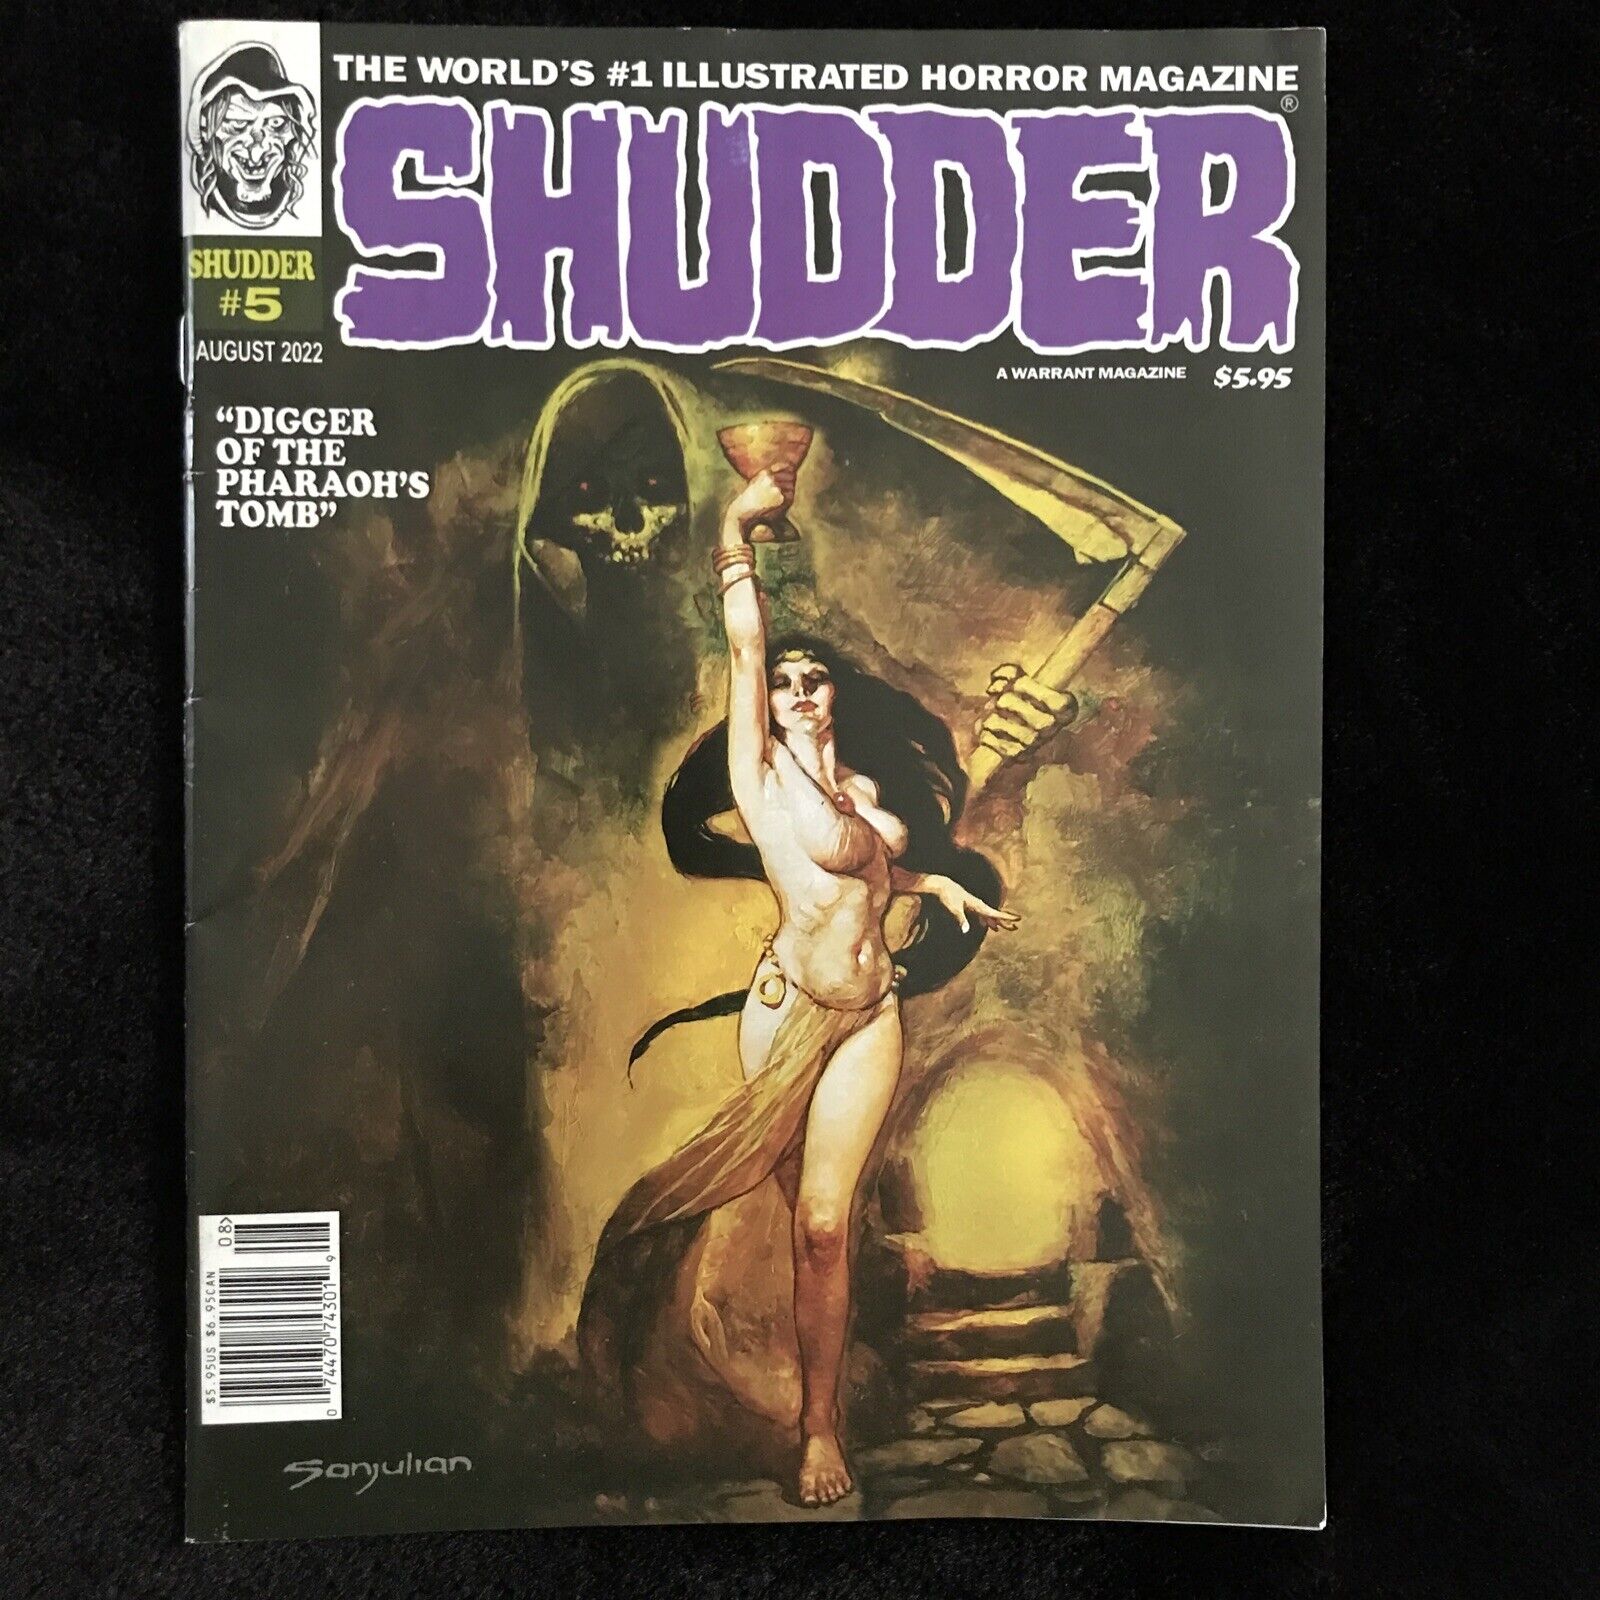 SHUDDER MAGAZINE Issue 5 AUG 2022